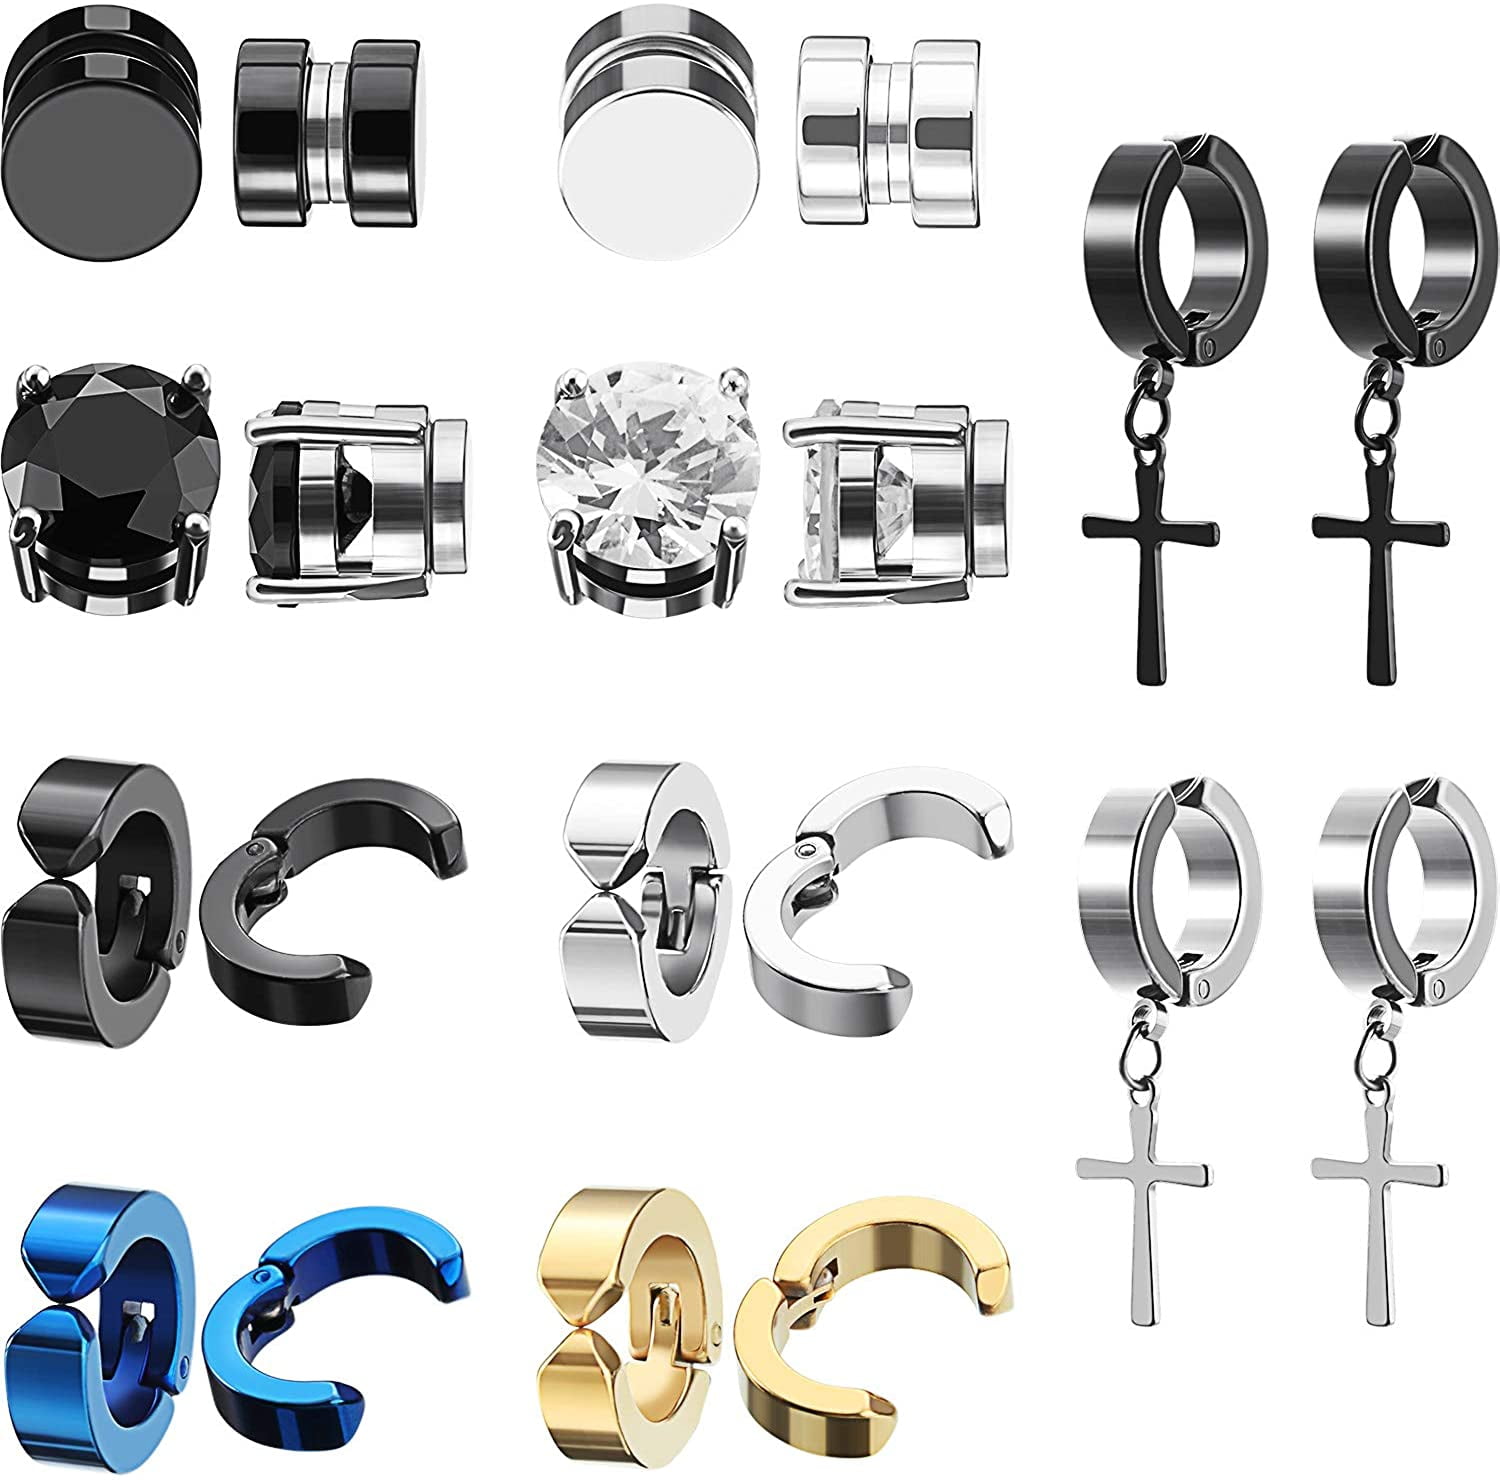 Dropship 12 Pairs Magnetic Stud Earrings For Men Stainless Magnetic Earrings  Non-Piercing Cross Dangle Hoop Earrings CZ Clip On Earring CZ Fake Earrings  Magnet Earrings Set to Sell Online at a Lower